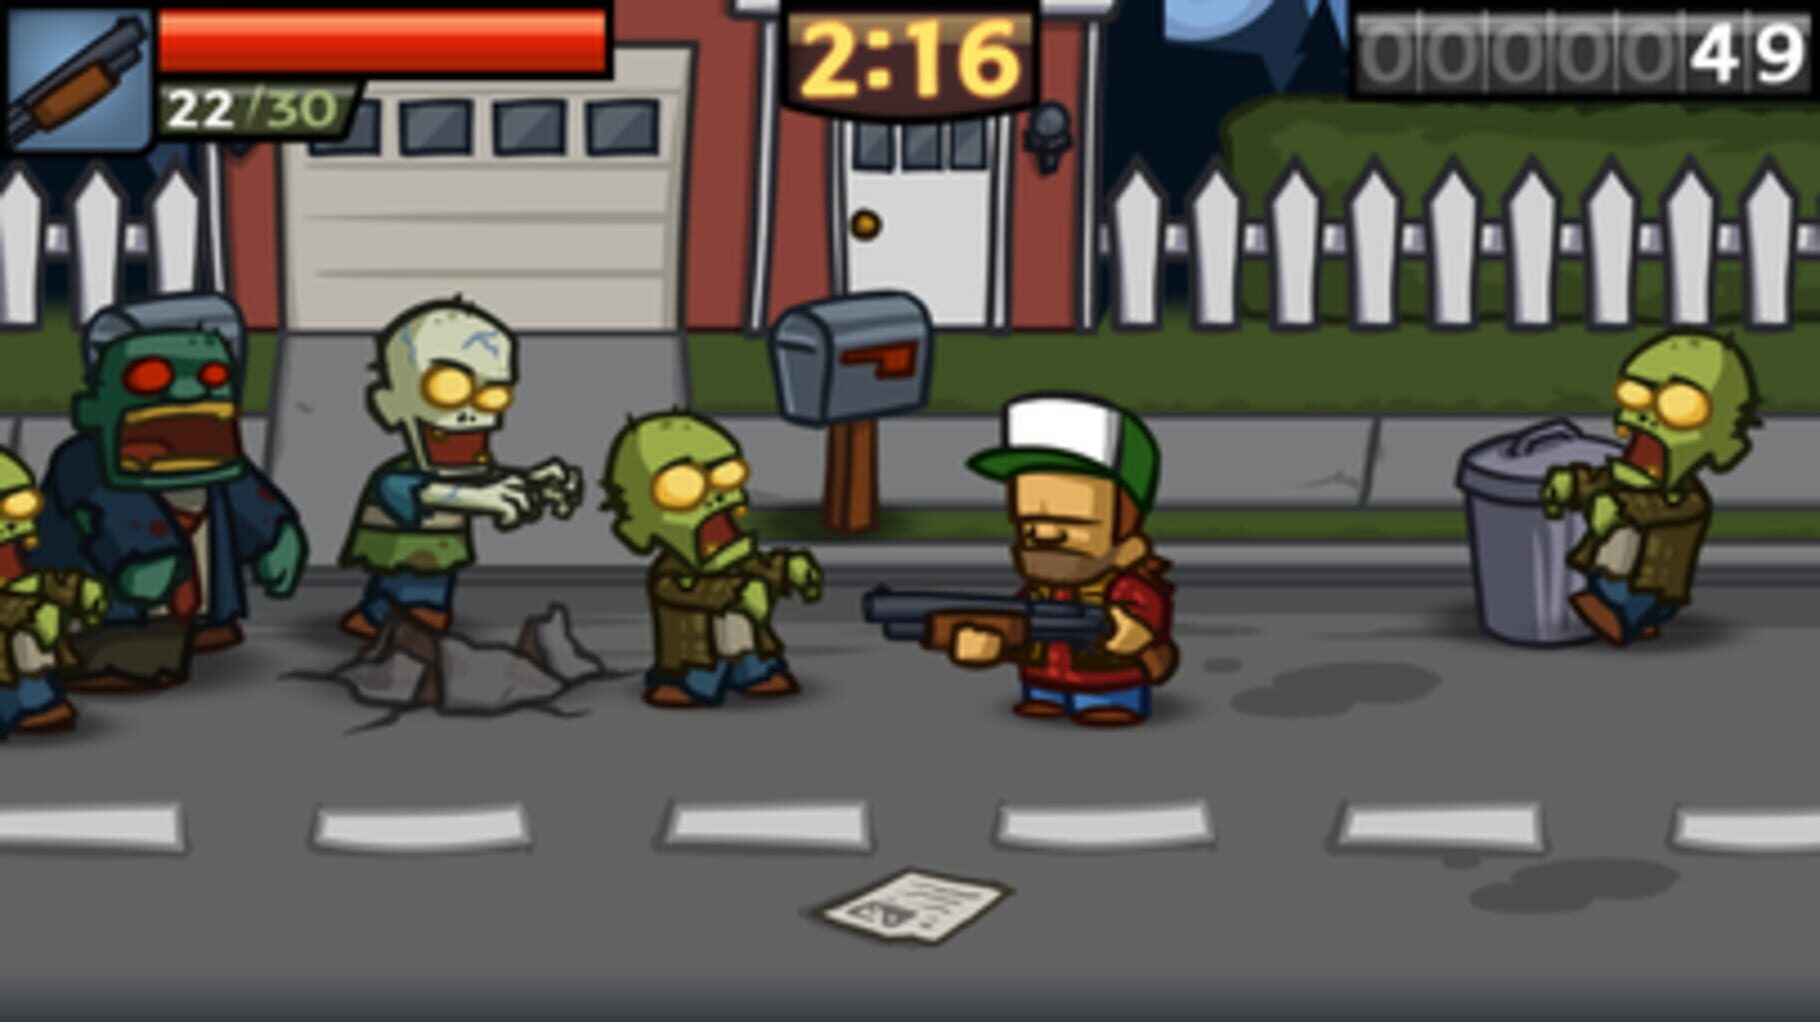 Zombieville USA 2 screenshots